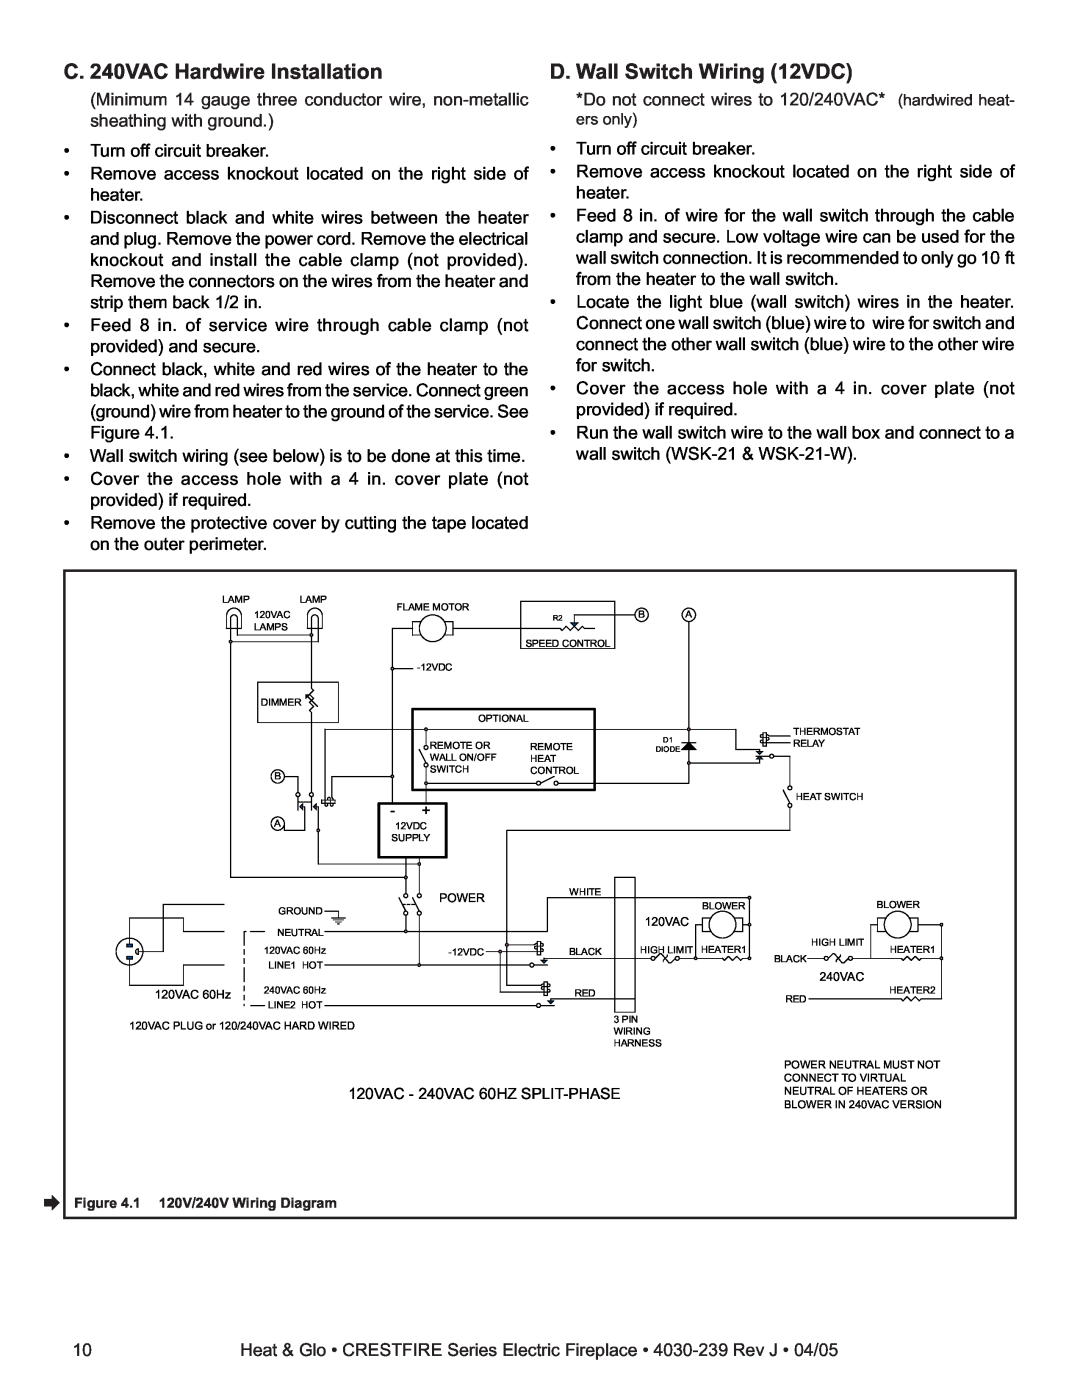 Heat & Glo LifeStyle CF550EV, CF550ENH, CF750EV, CF750ENH C. 240VAC Hardwire Installation, D. Wall Switch Wiring 12VDC 